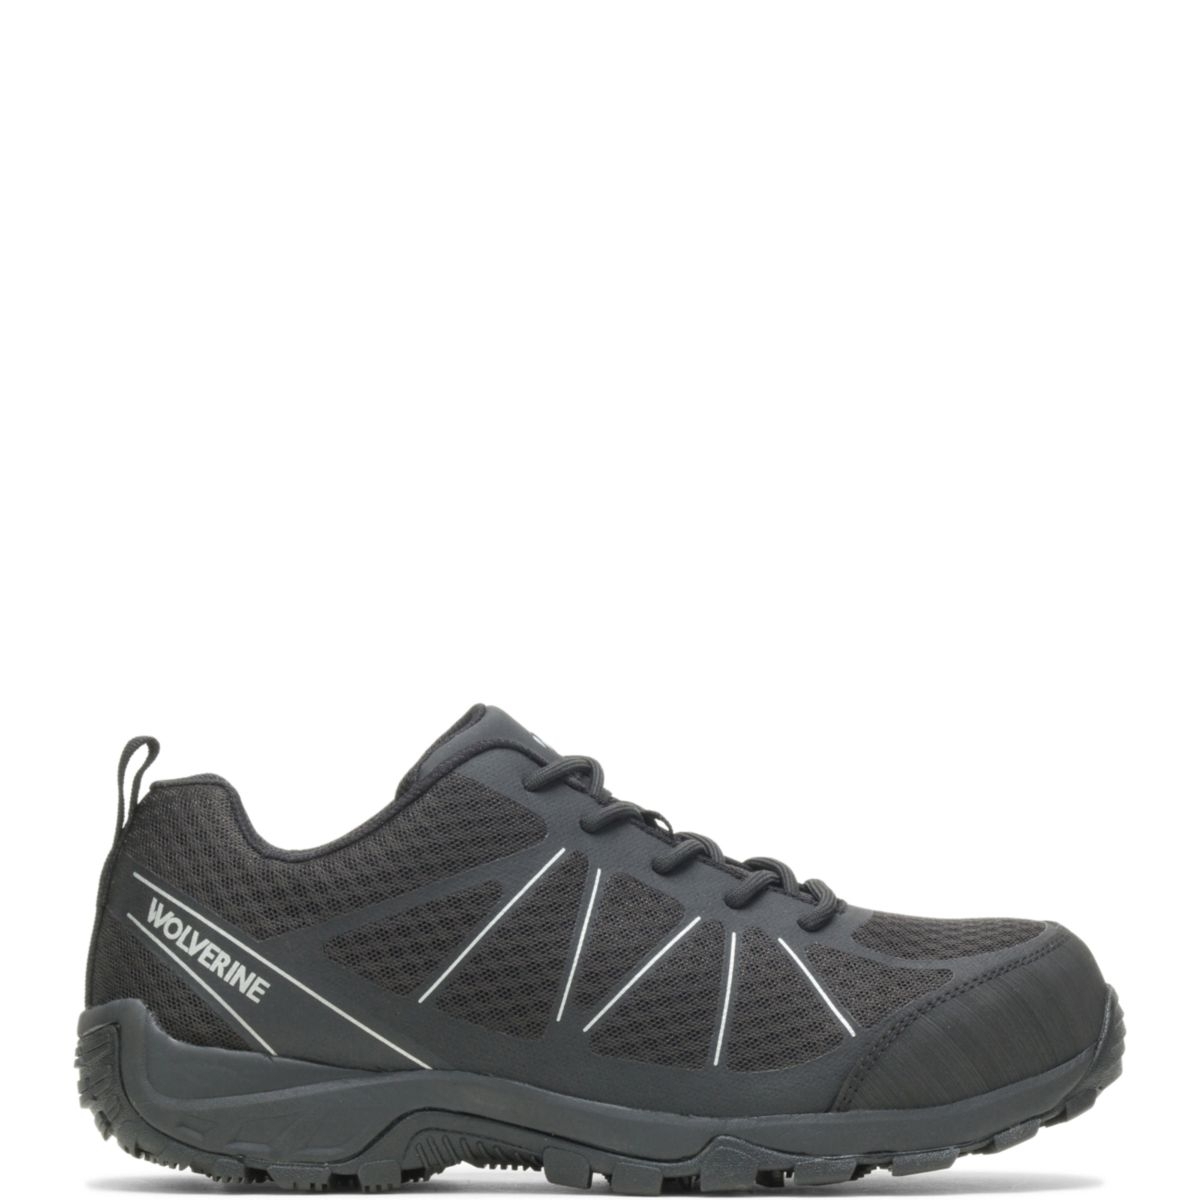 WOLVERINE Men's Amherst II CarbonMAXÂ® Composite Toe Work Shoe Black - W201147 BLACK - BLACK, 9 X-Wide